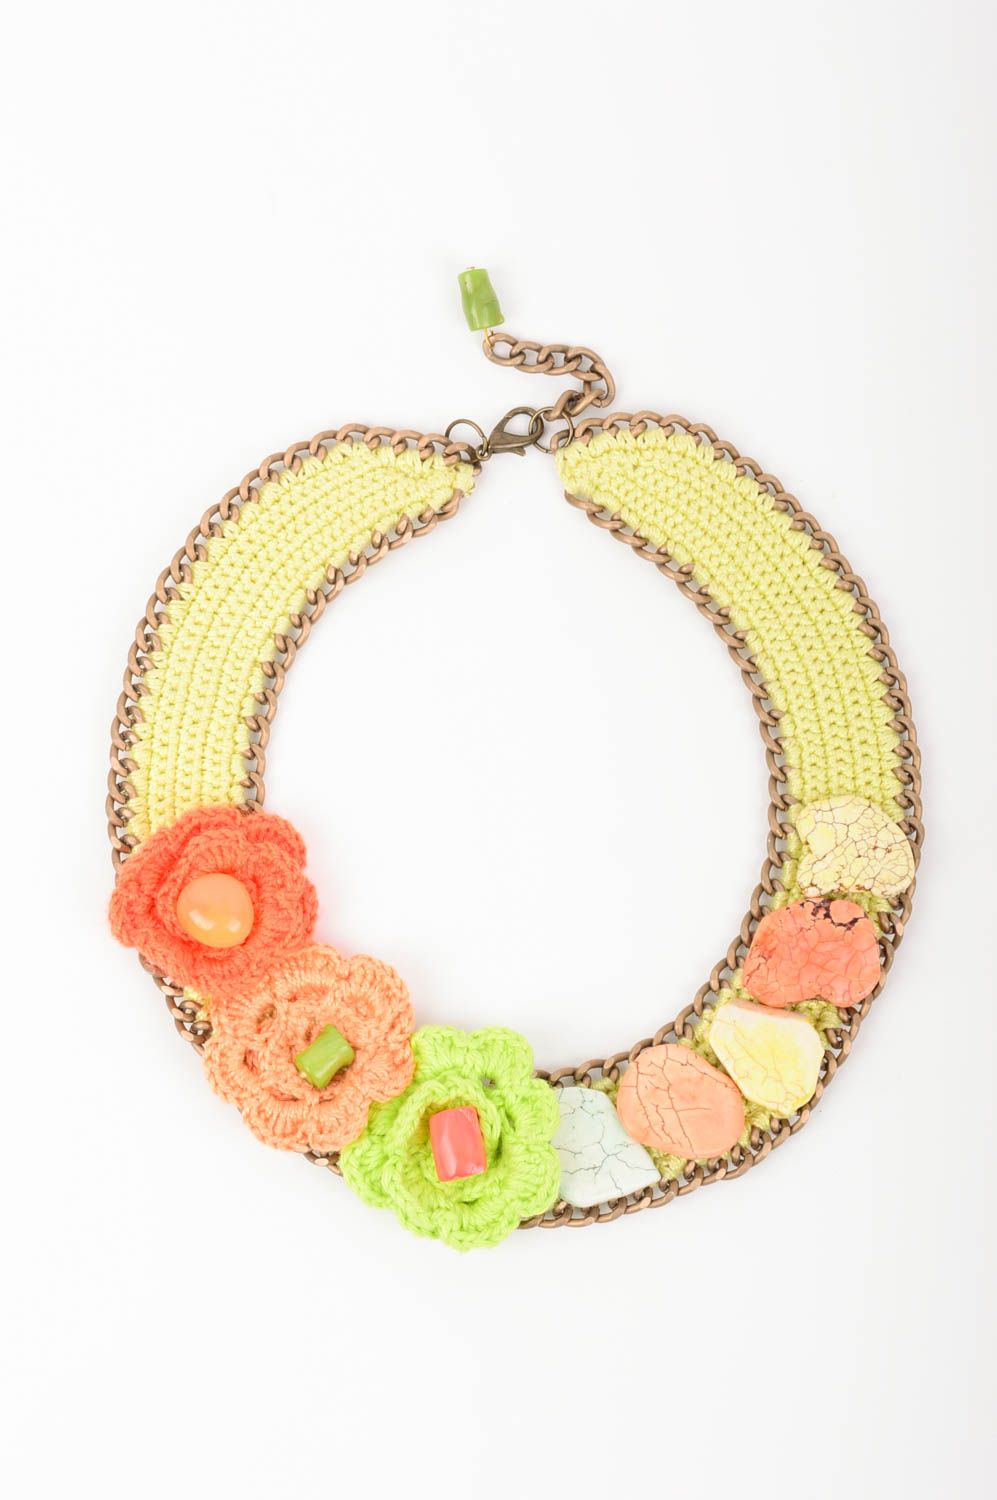 Crochet jewelry handmade necklace crochet necklace gemstone jewelry gift ideas photo 1